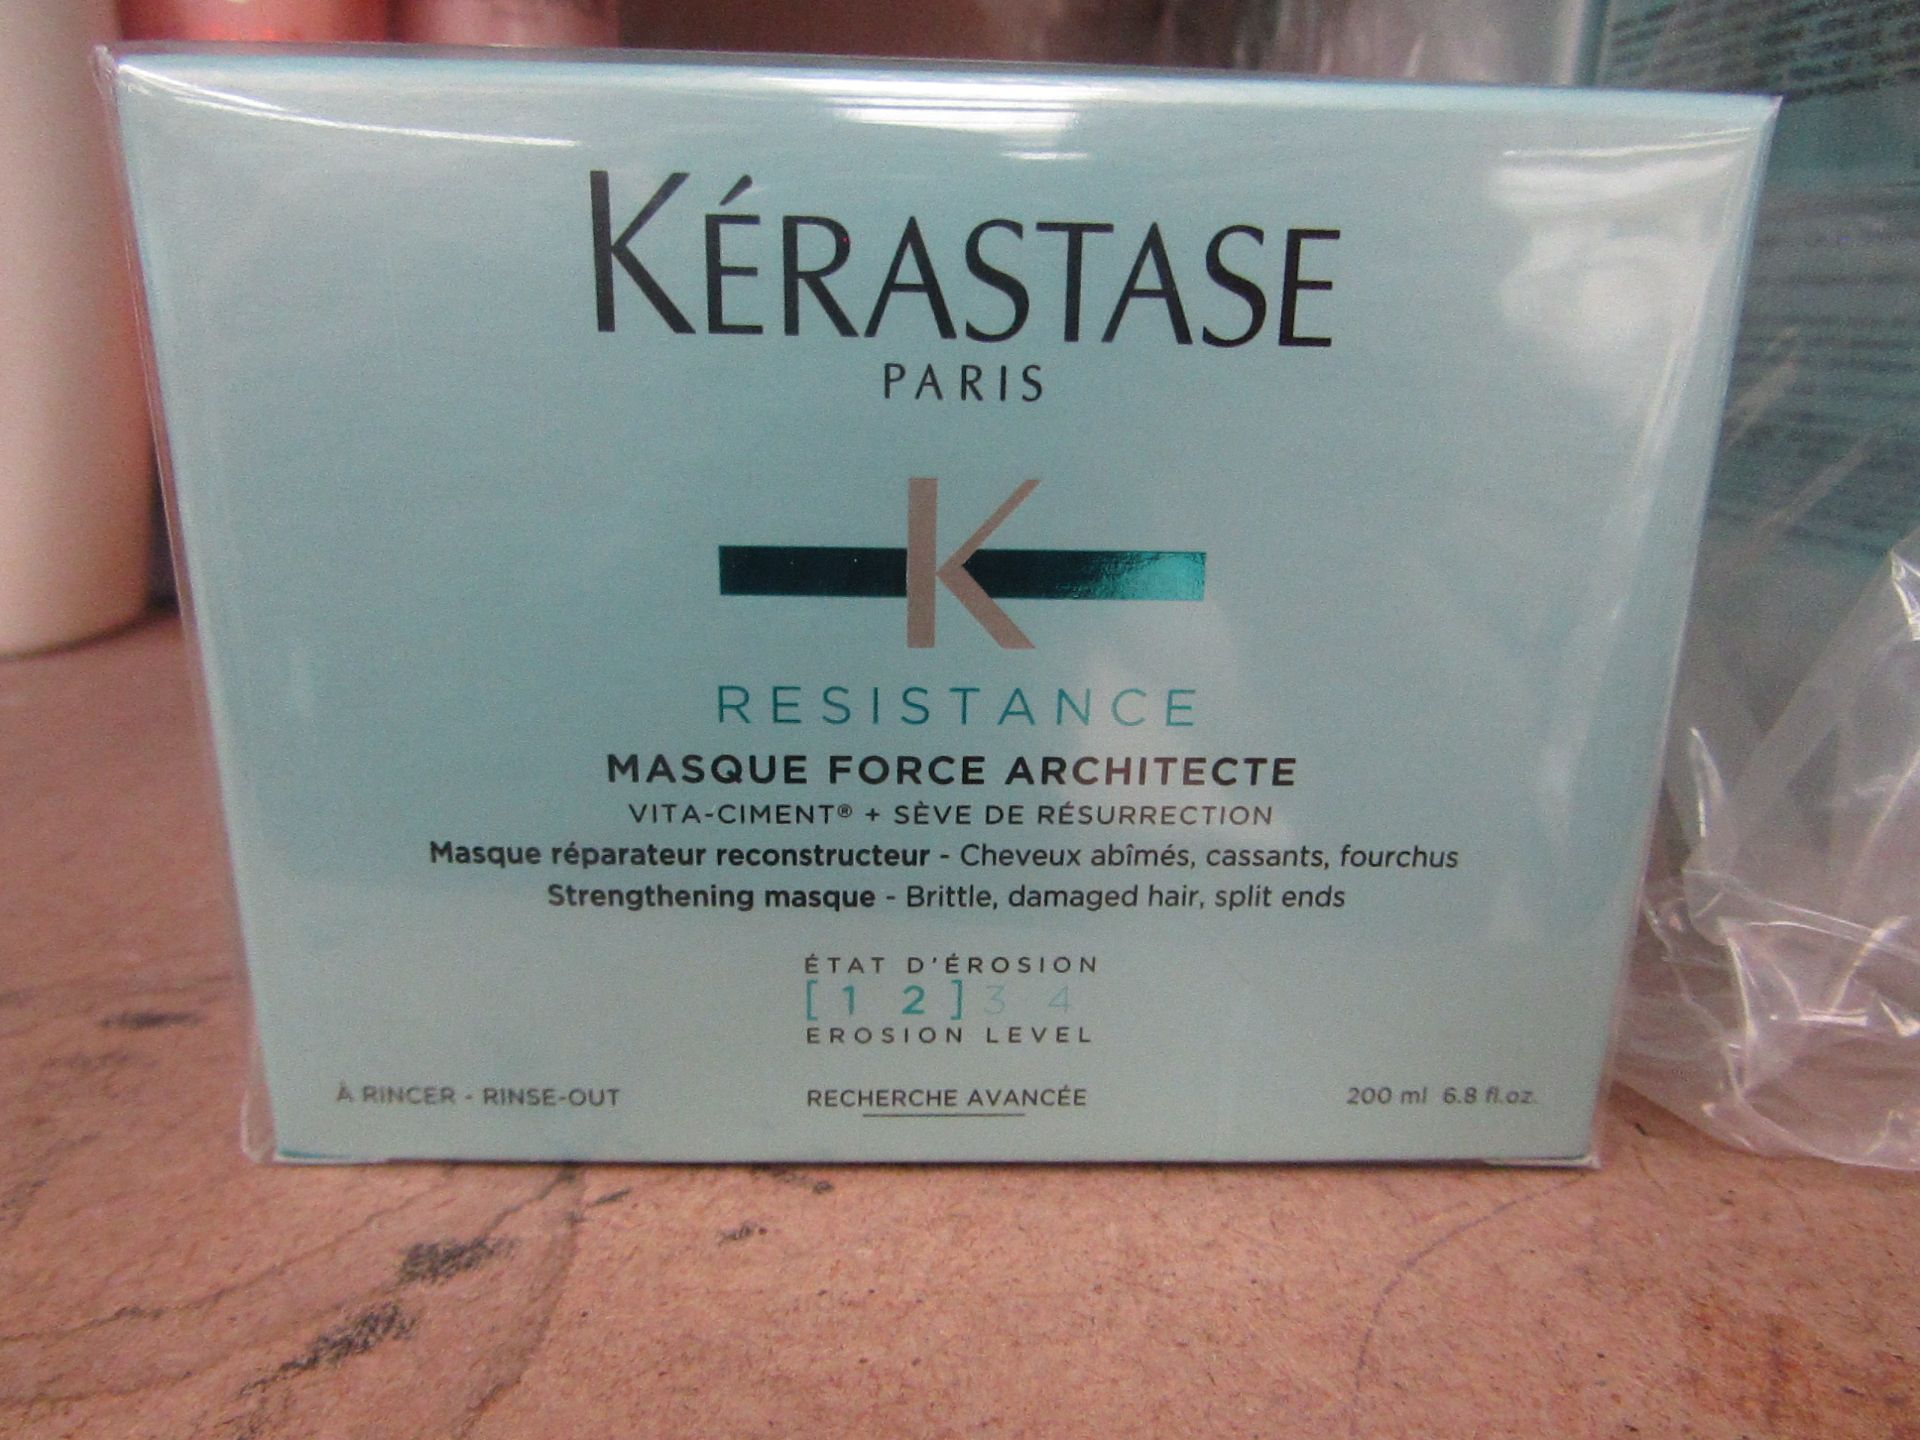 1x Kerastase - Resistance Masque Force Architecte 200ml - Unused. 1x Kerastase - Resistance